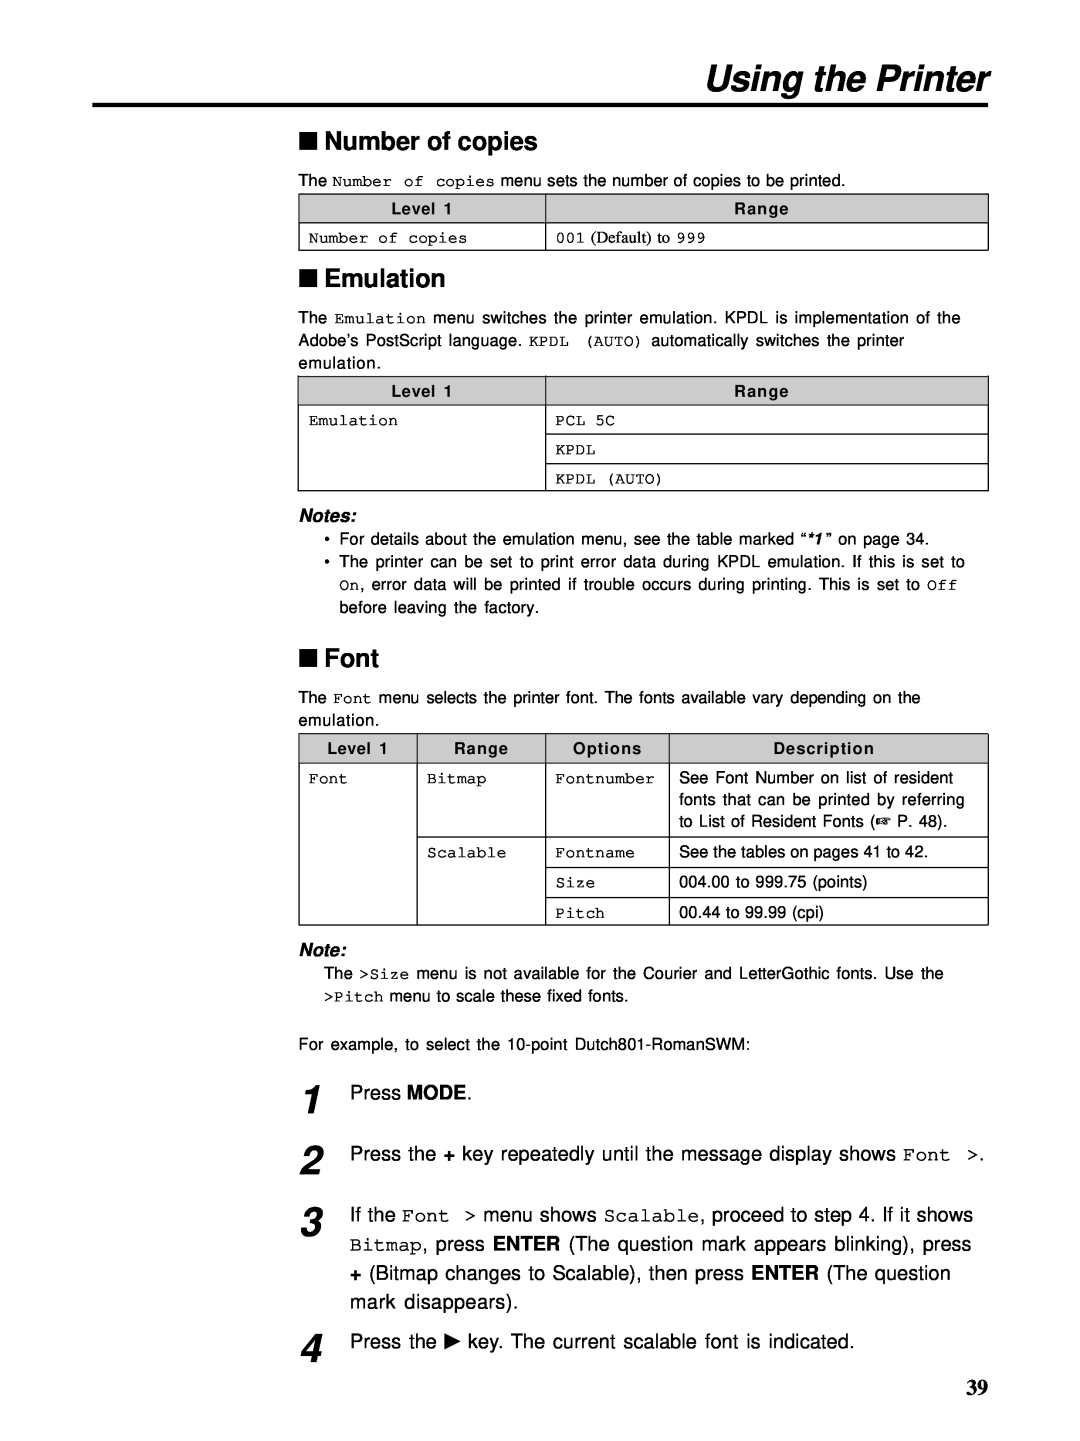 HP Ci 1100 manual Number of copies, Emulation, Font, Using the Printer, Press MODE 